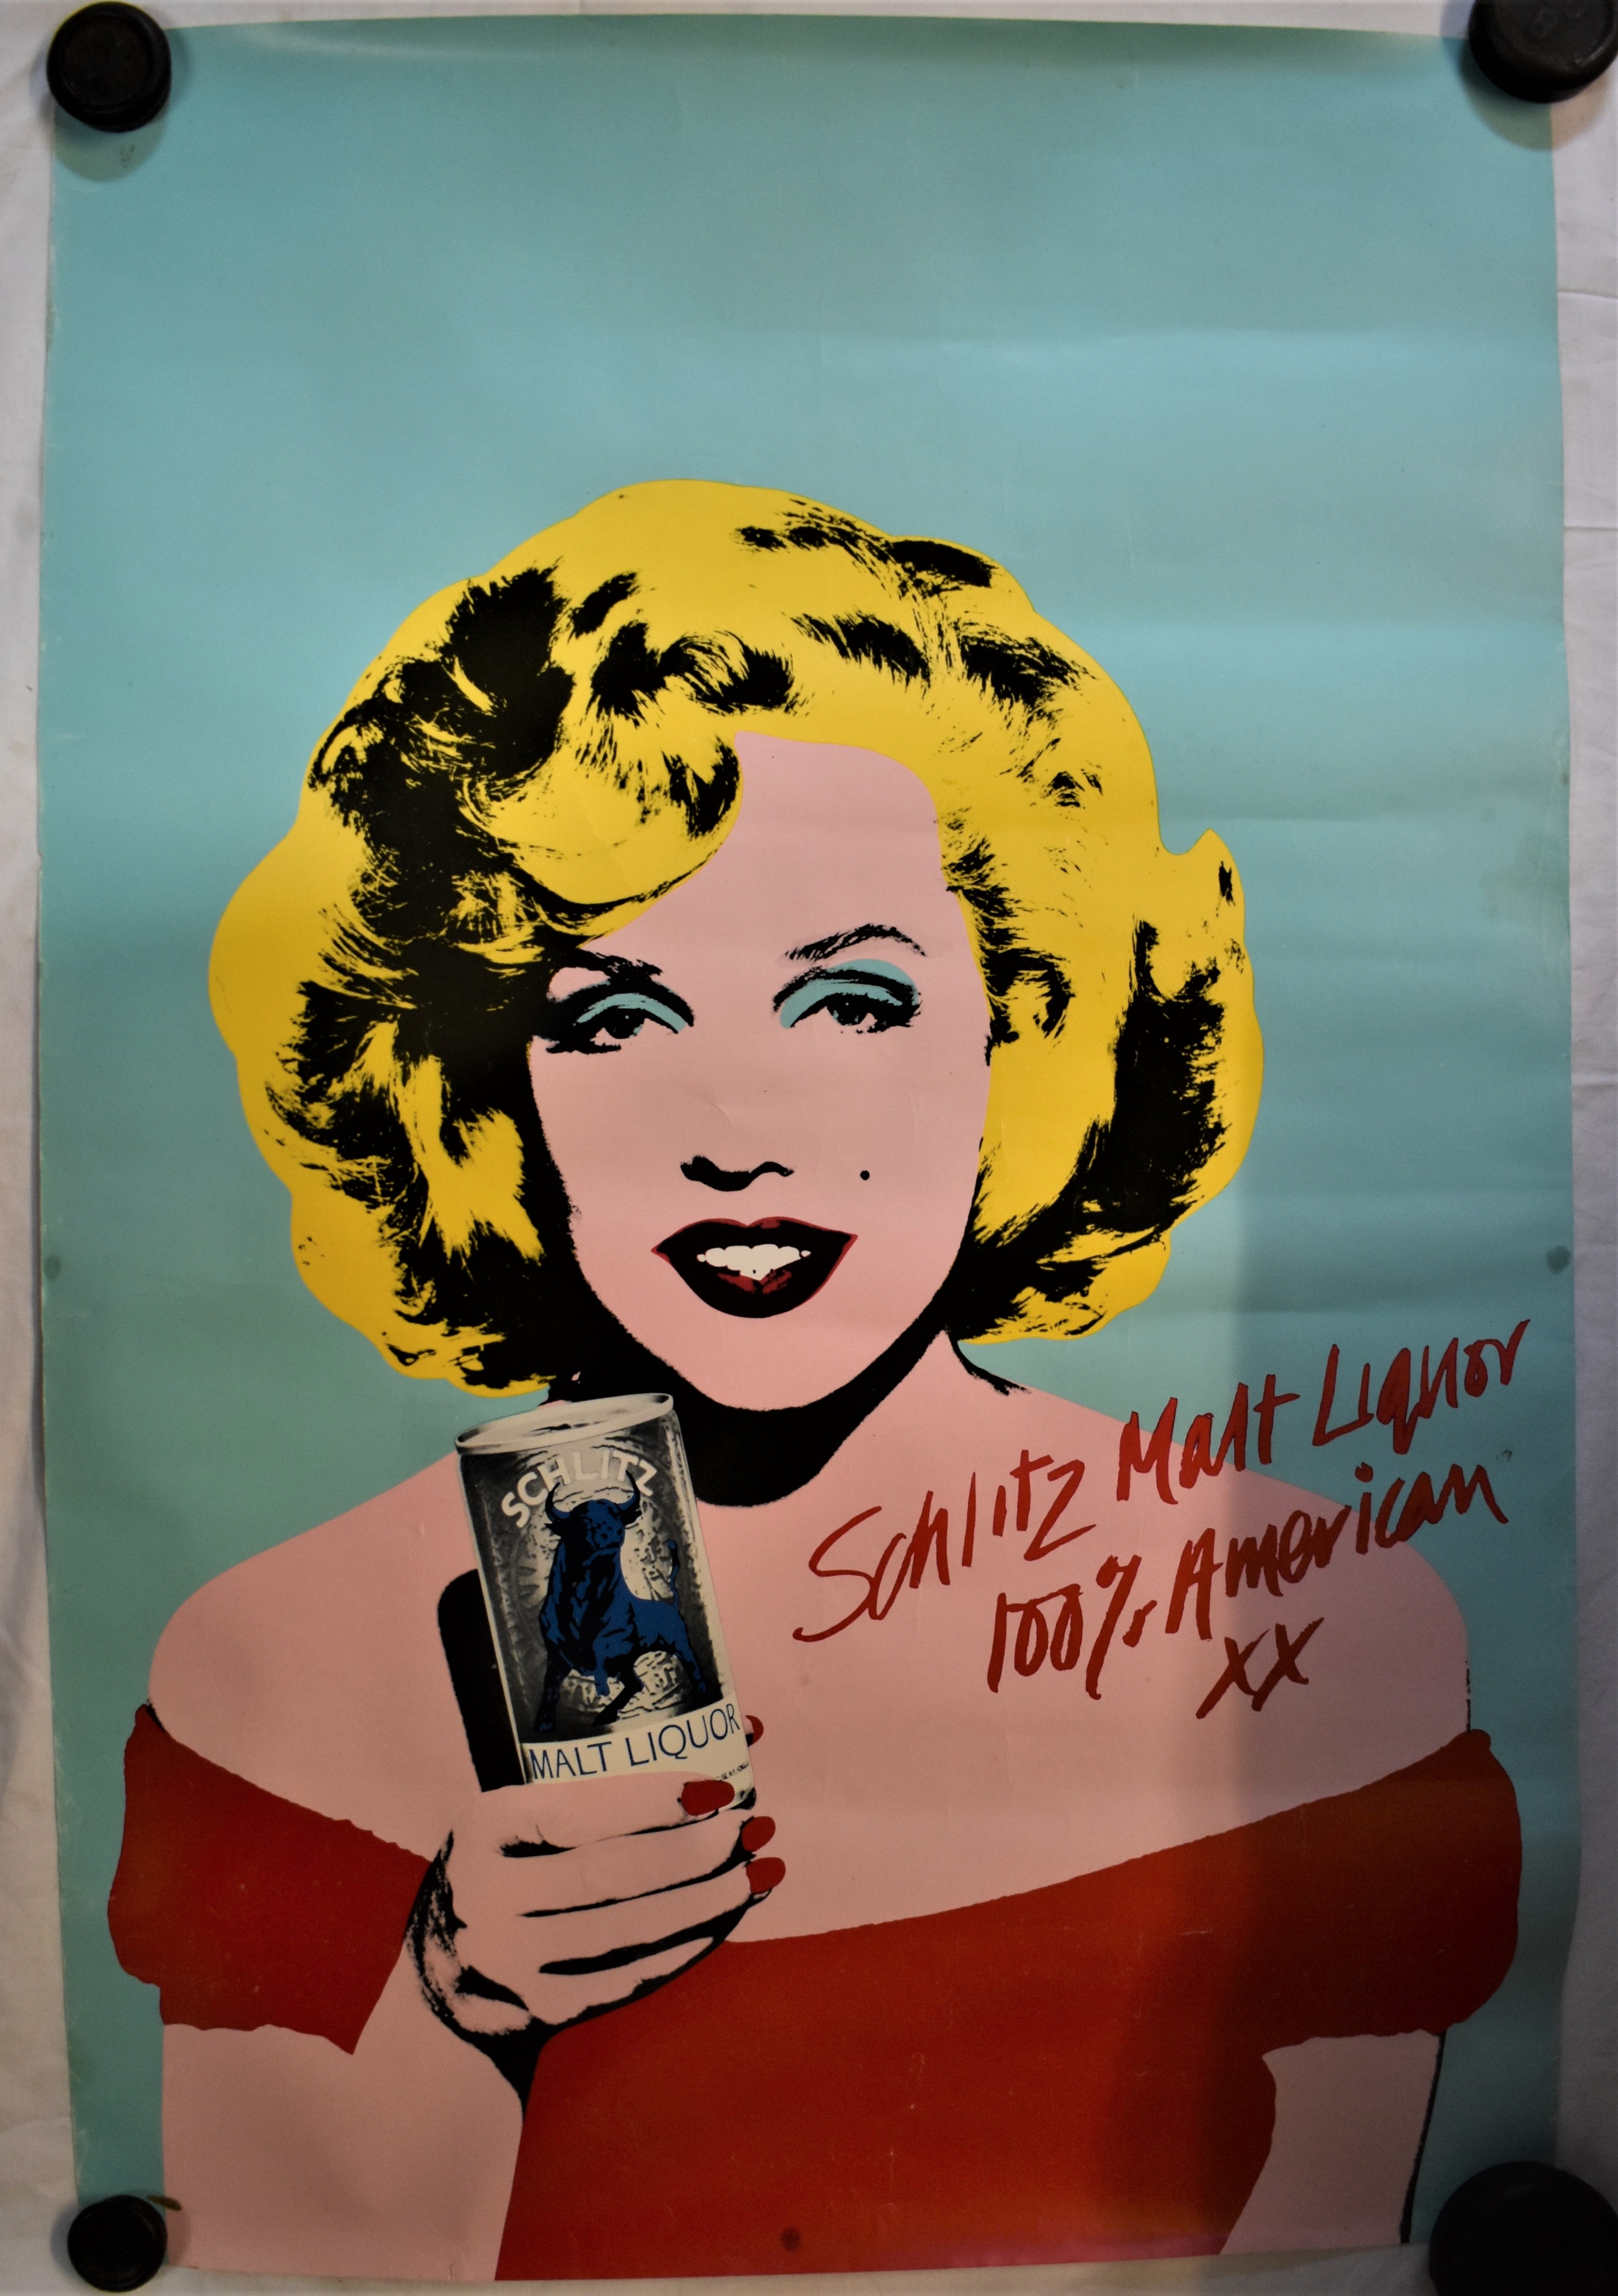 Vintage Marilyn Monroe poster by Andy Warhol - 'Schlitz Malt Liquor - 100% American' advertising po